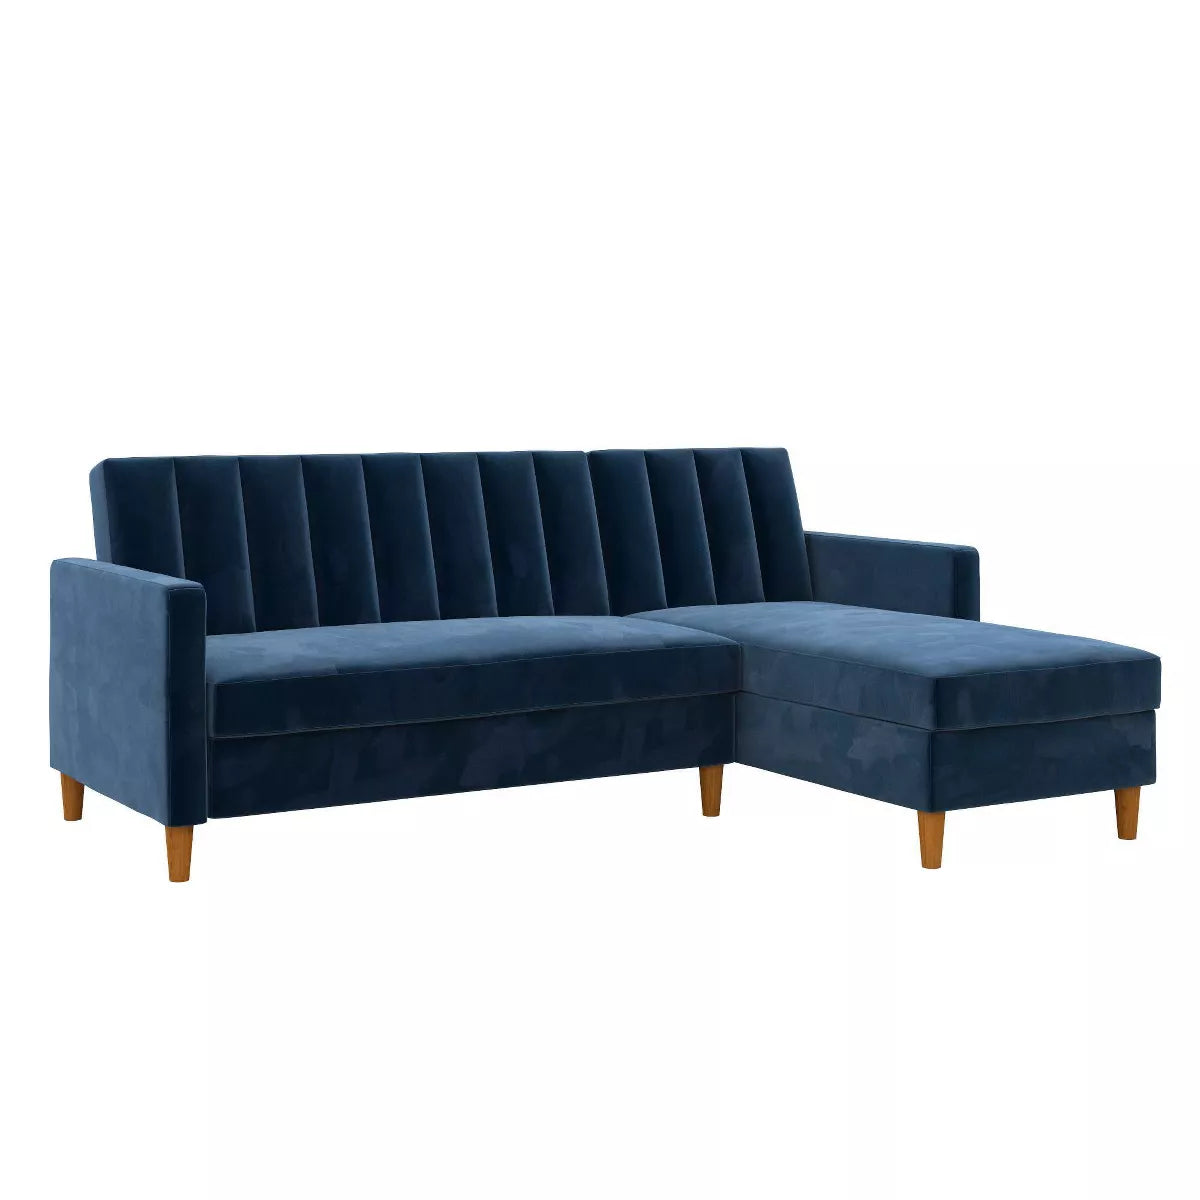 Celine Sectional Futon with Storage Reclining Couch Navy Velvet - Room & Joy Sofa